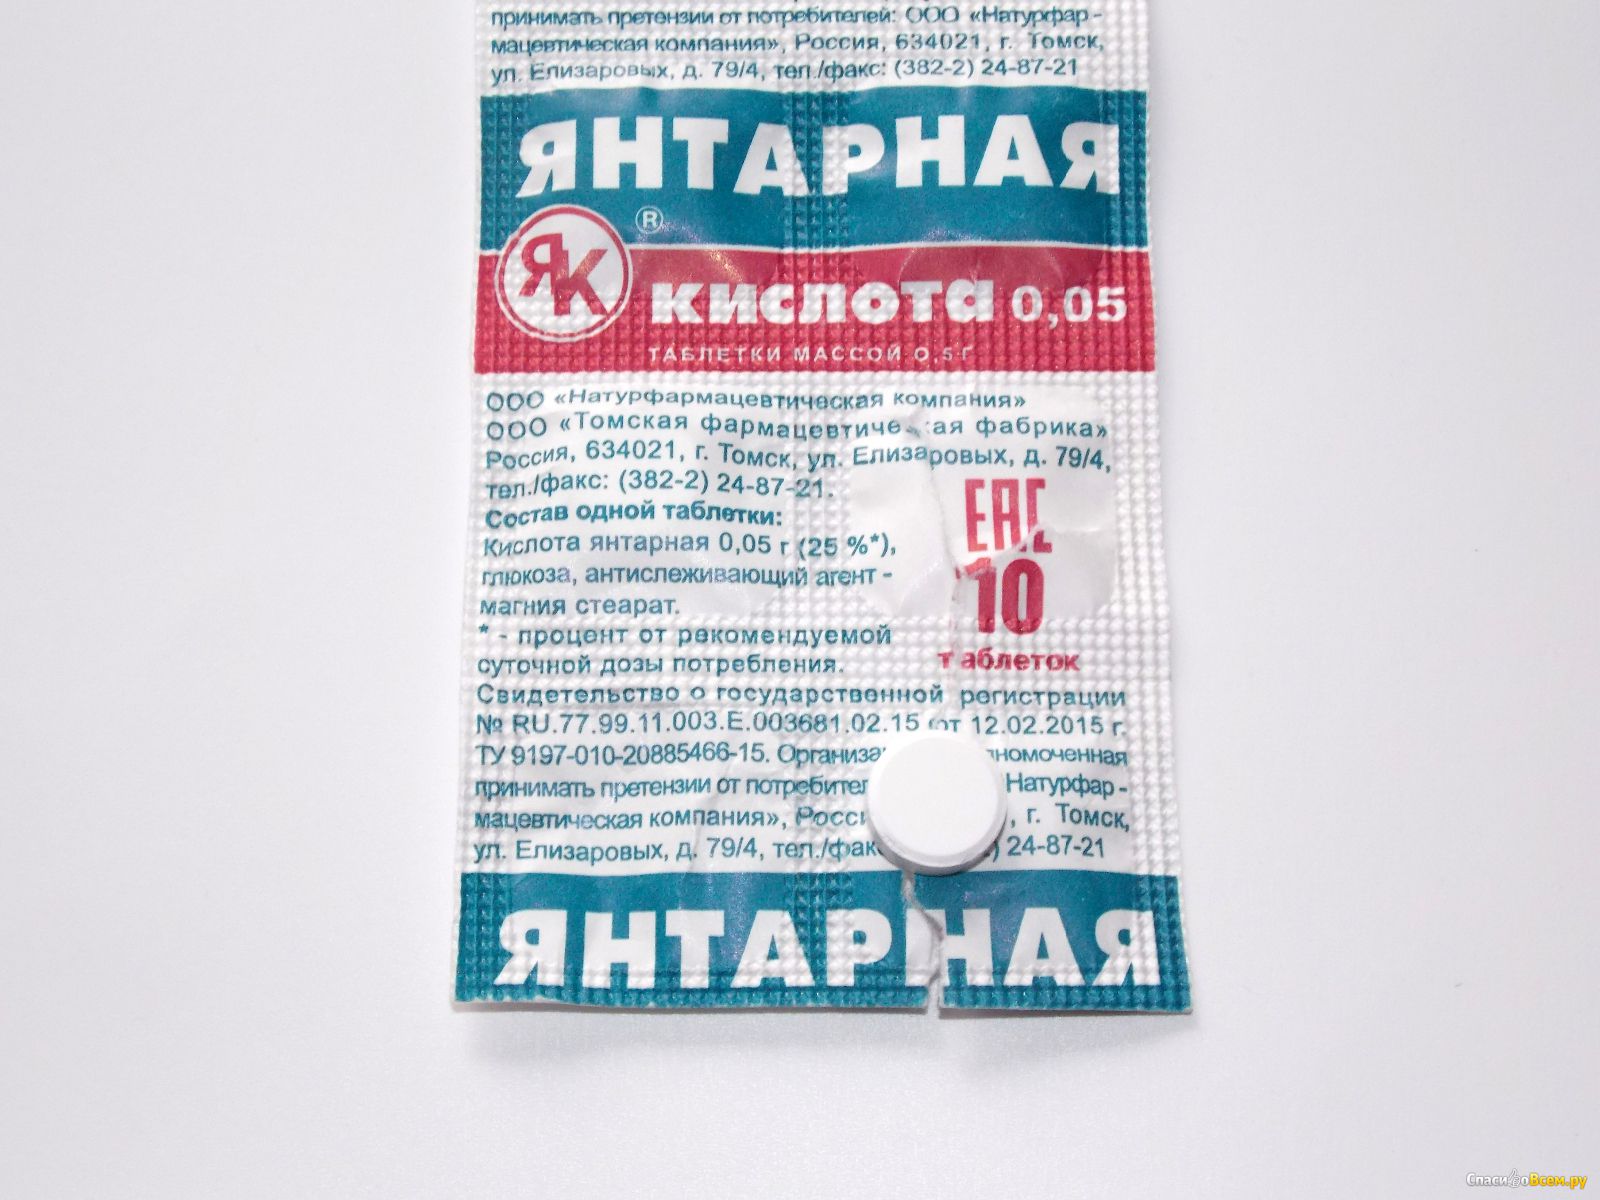 Янтарная Кислота В Аптеках Минска